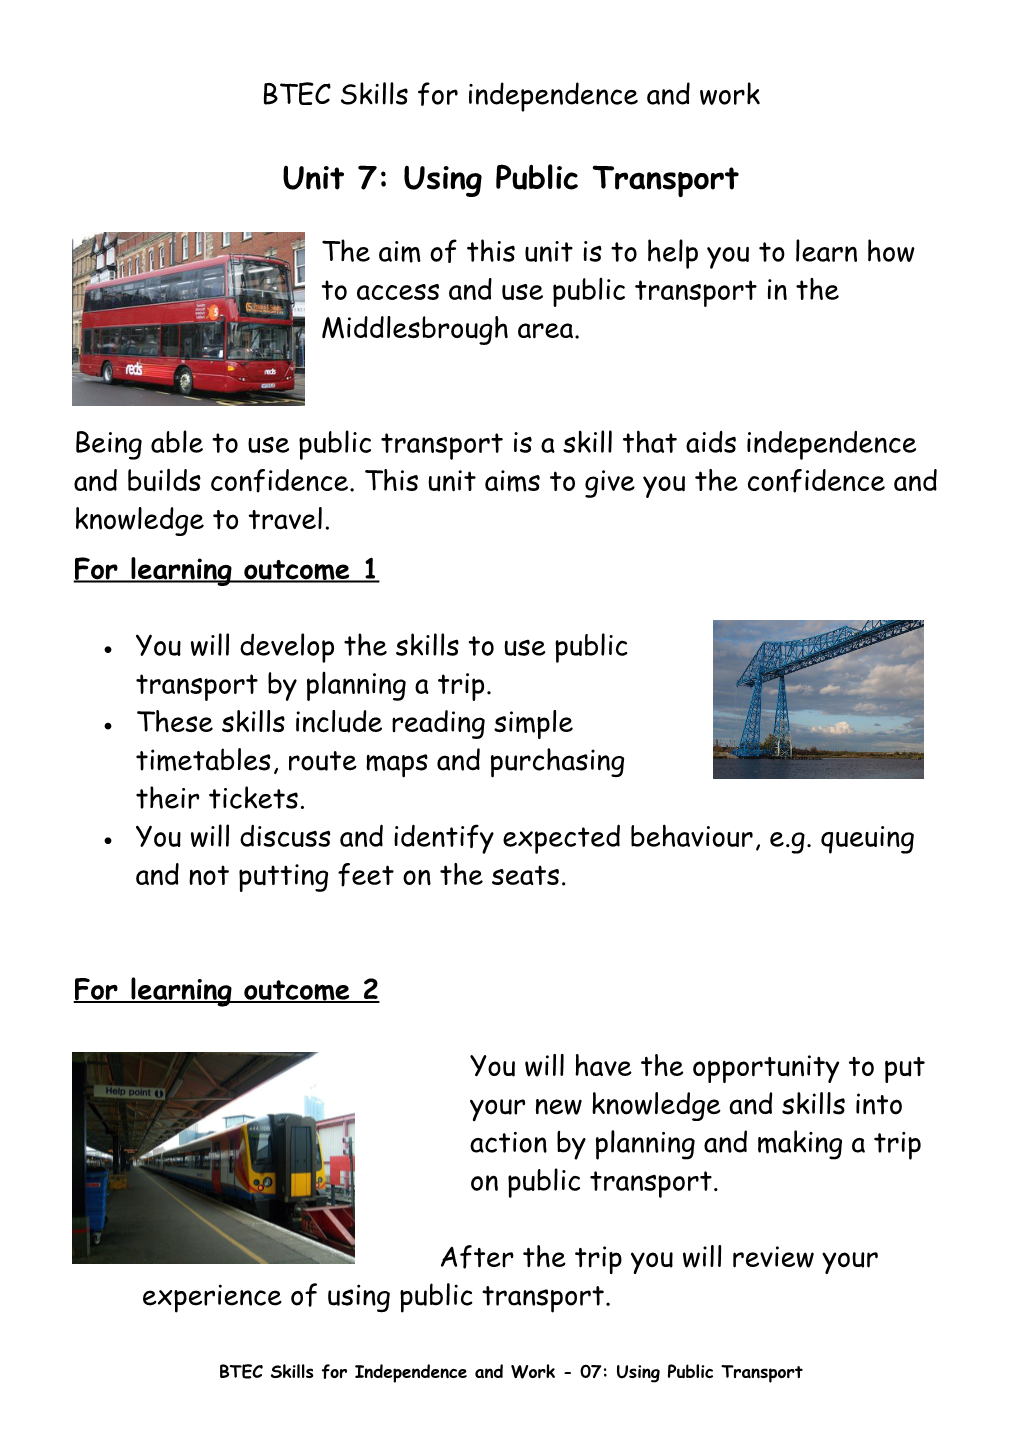 Unit 7: Using Public Transport